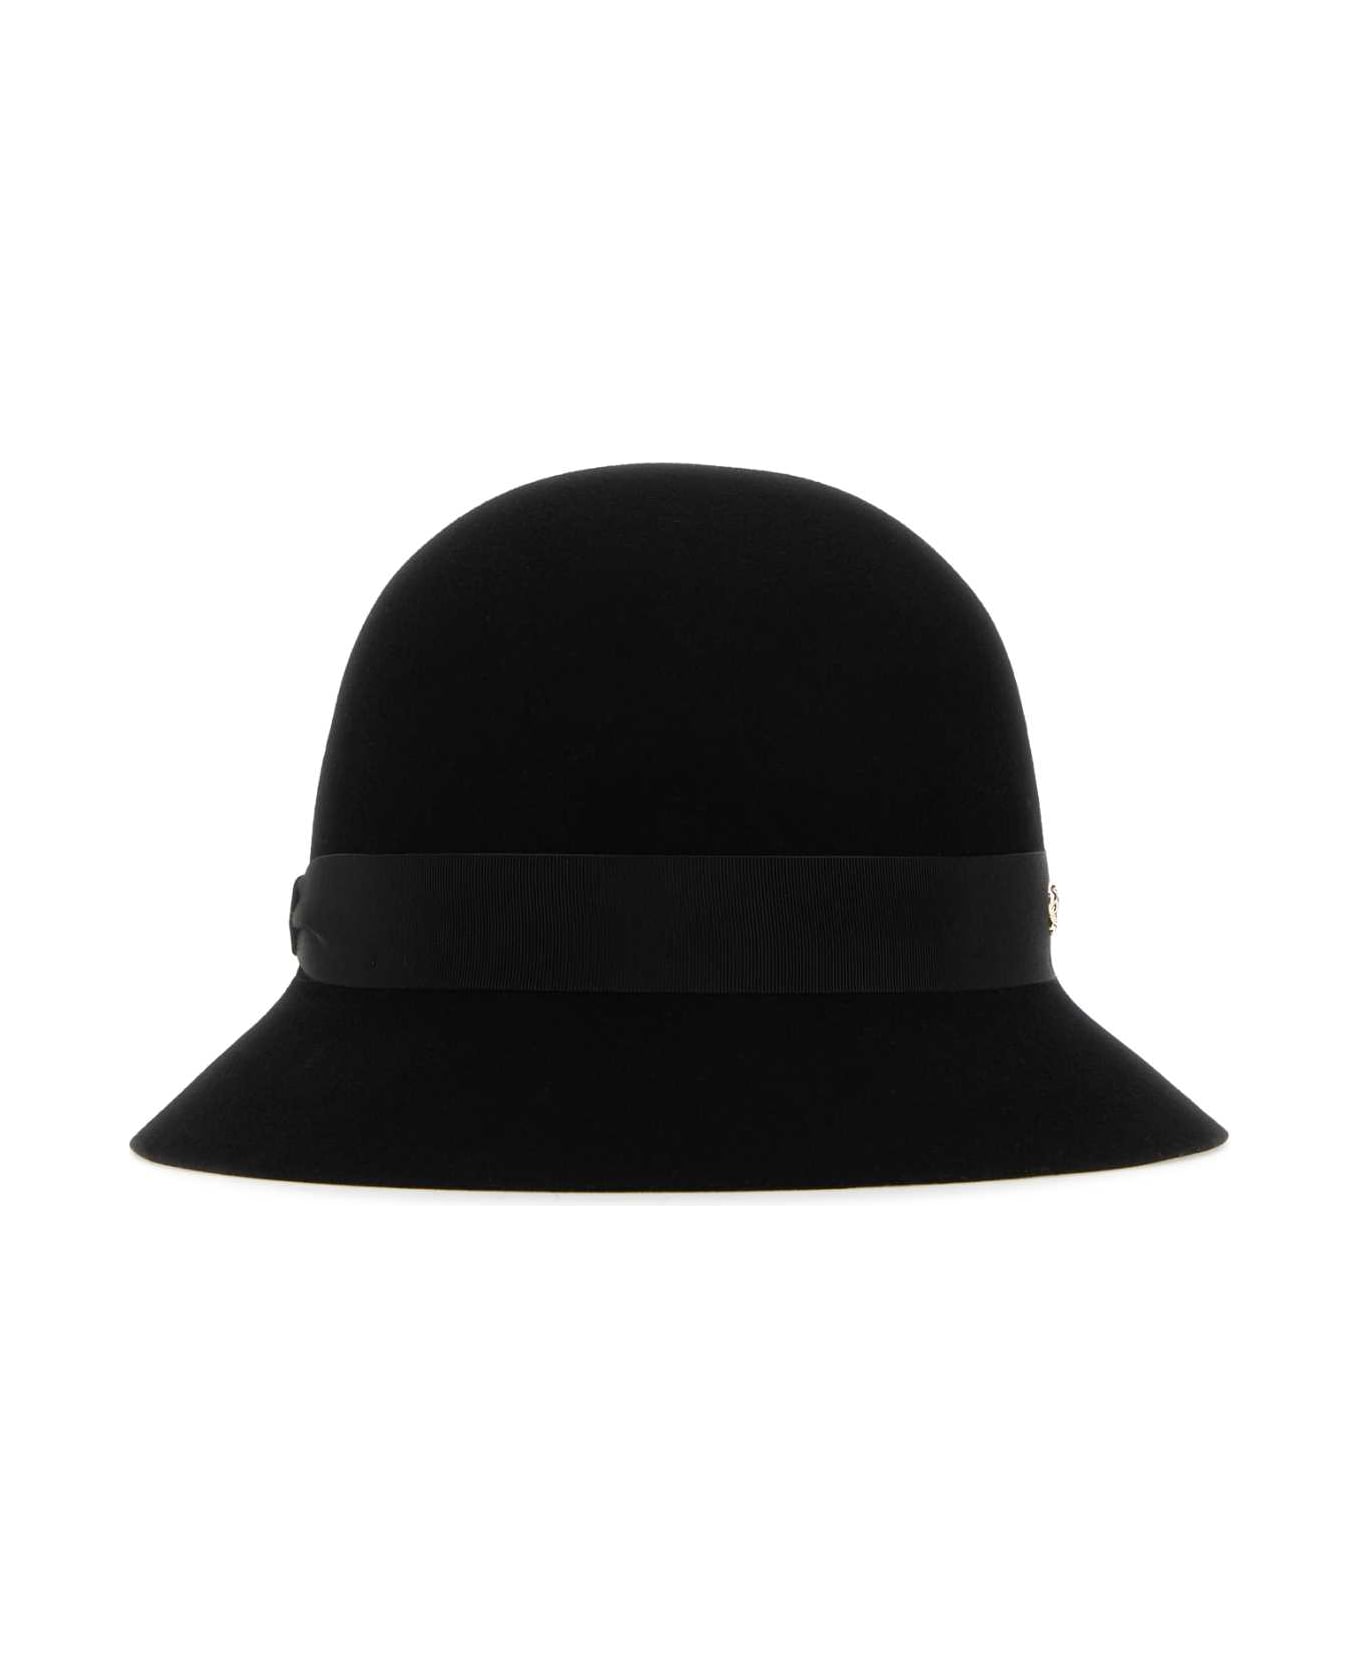 Helen Kaminski Black Felt Ella Conscious Bucket Hat - BLACKBLACK